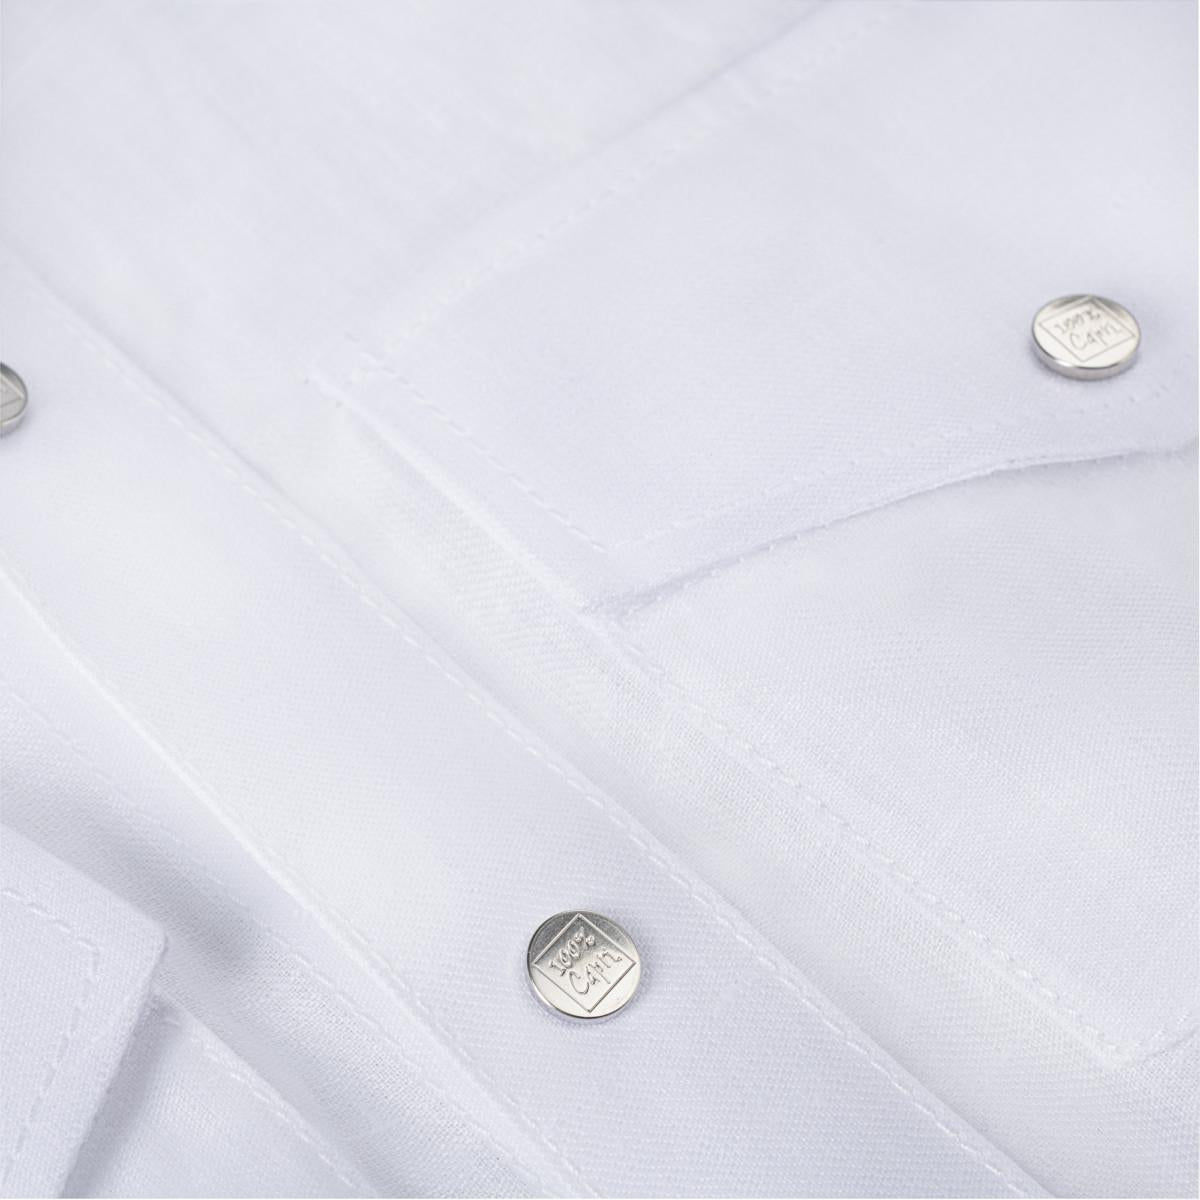 Camicia Denim white details 100% Capri